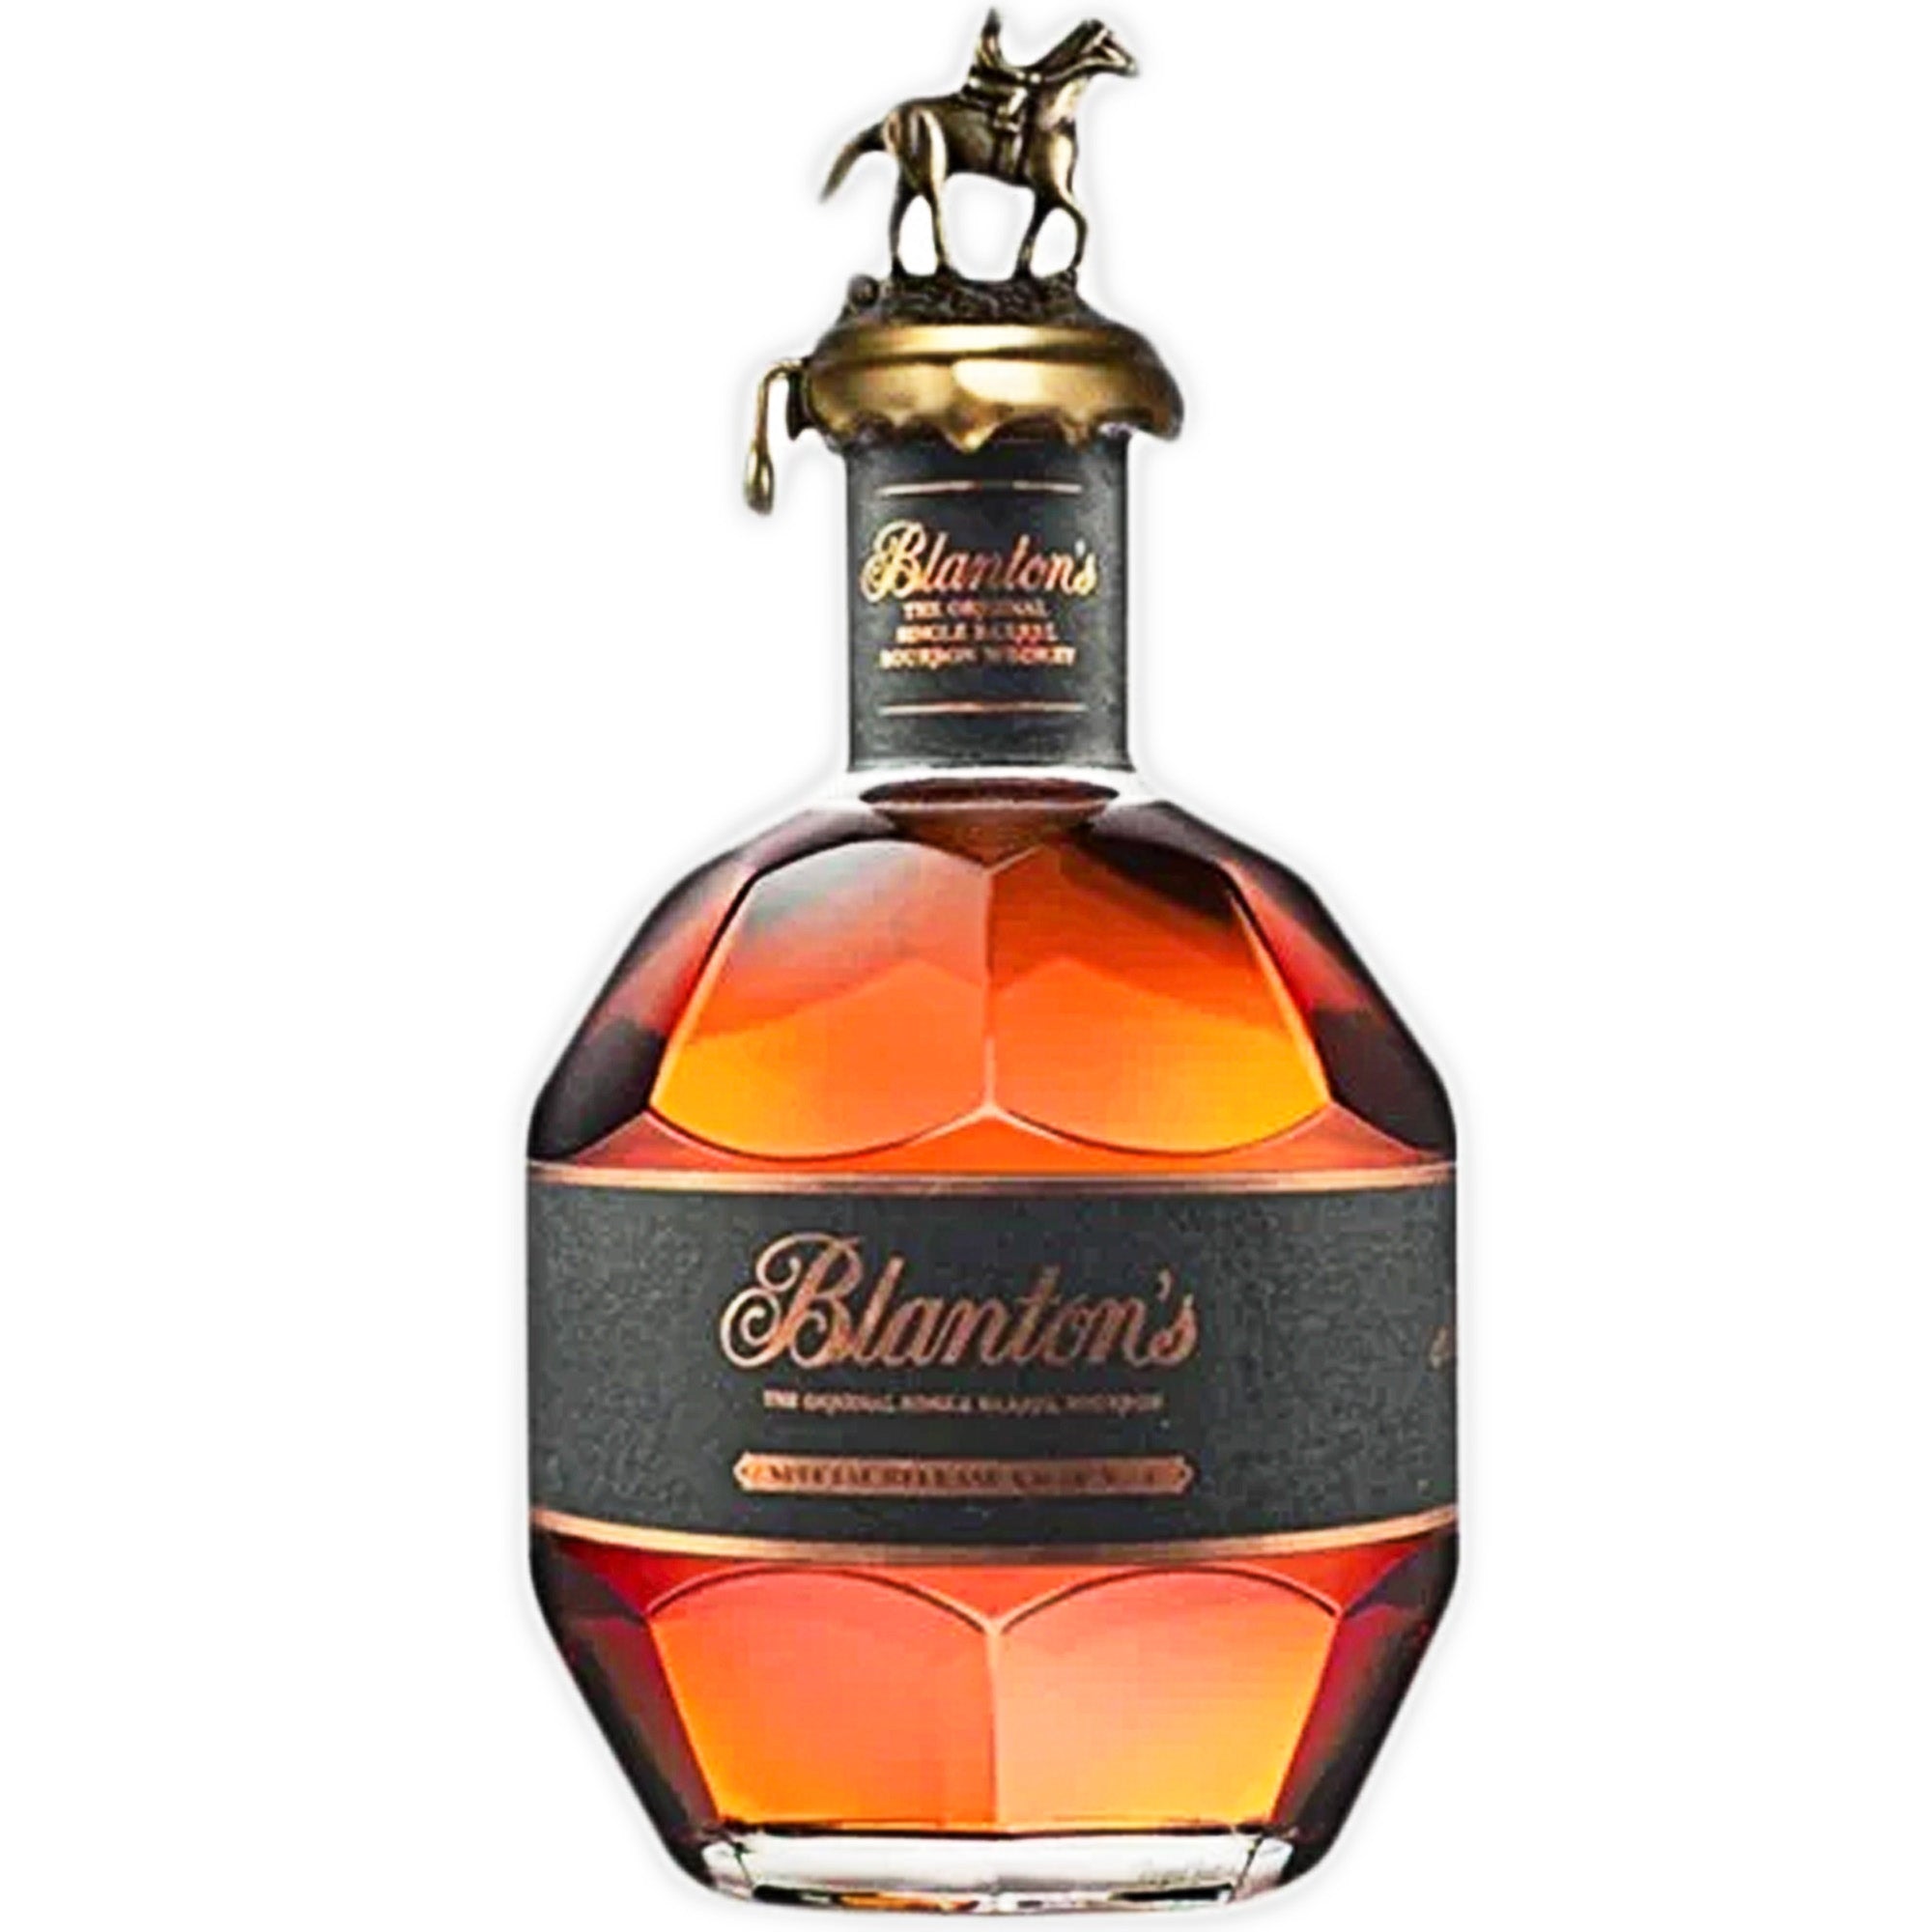 Blanton's Bourbon Special Release Char No4 63,90% 700ml